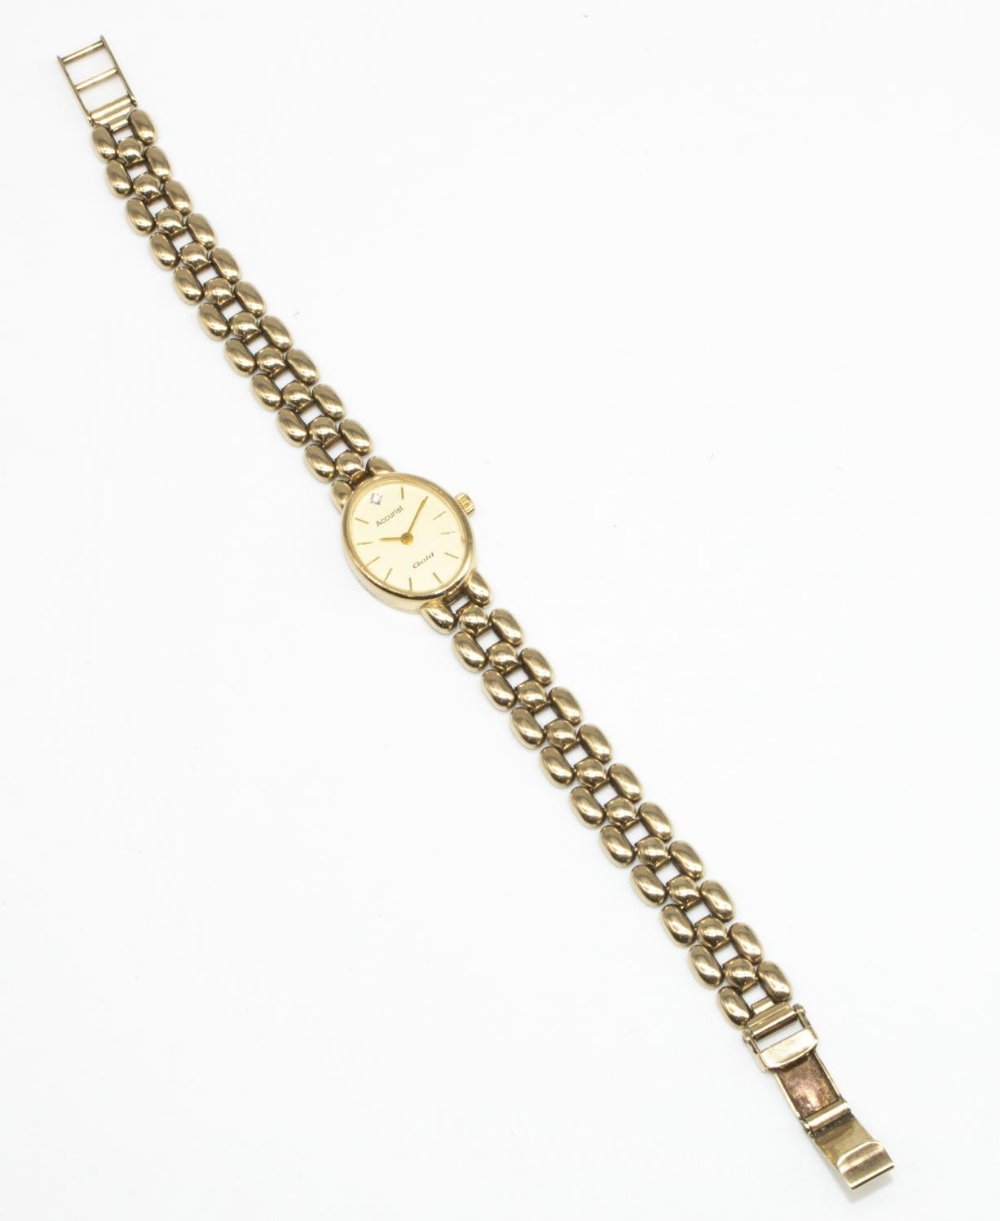 Ladies Accurist 9ct gold cased quartz wristwatch, champagne coloured dial with applied baton hour